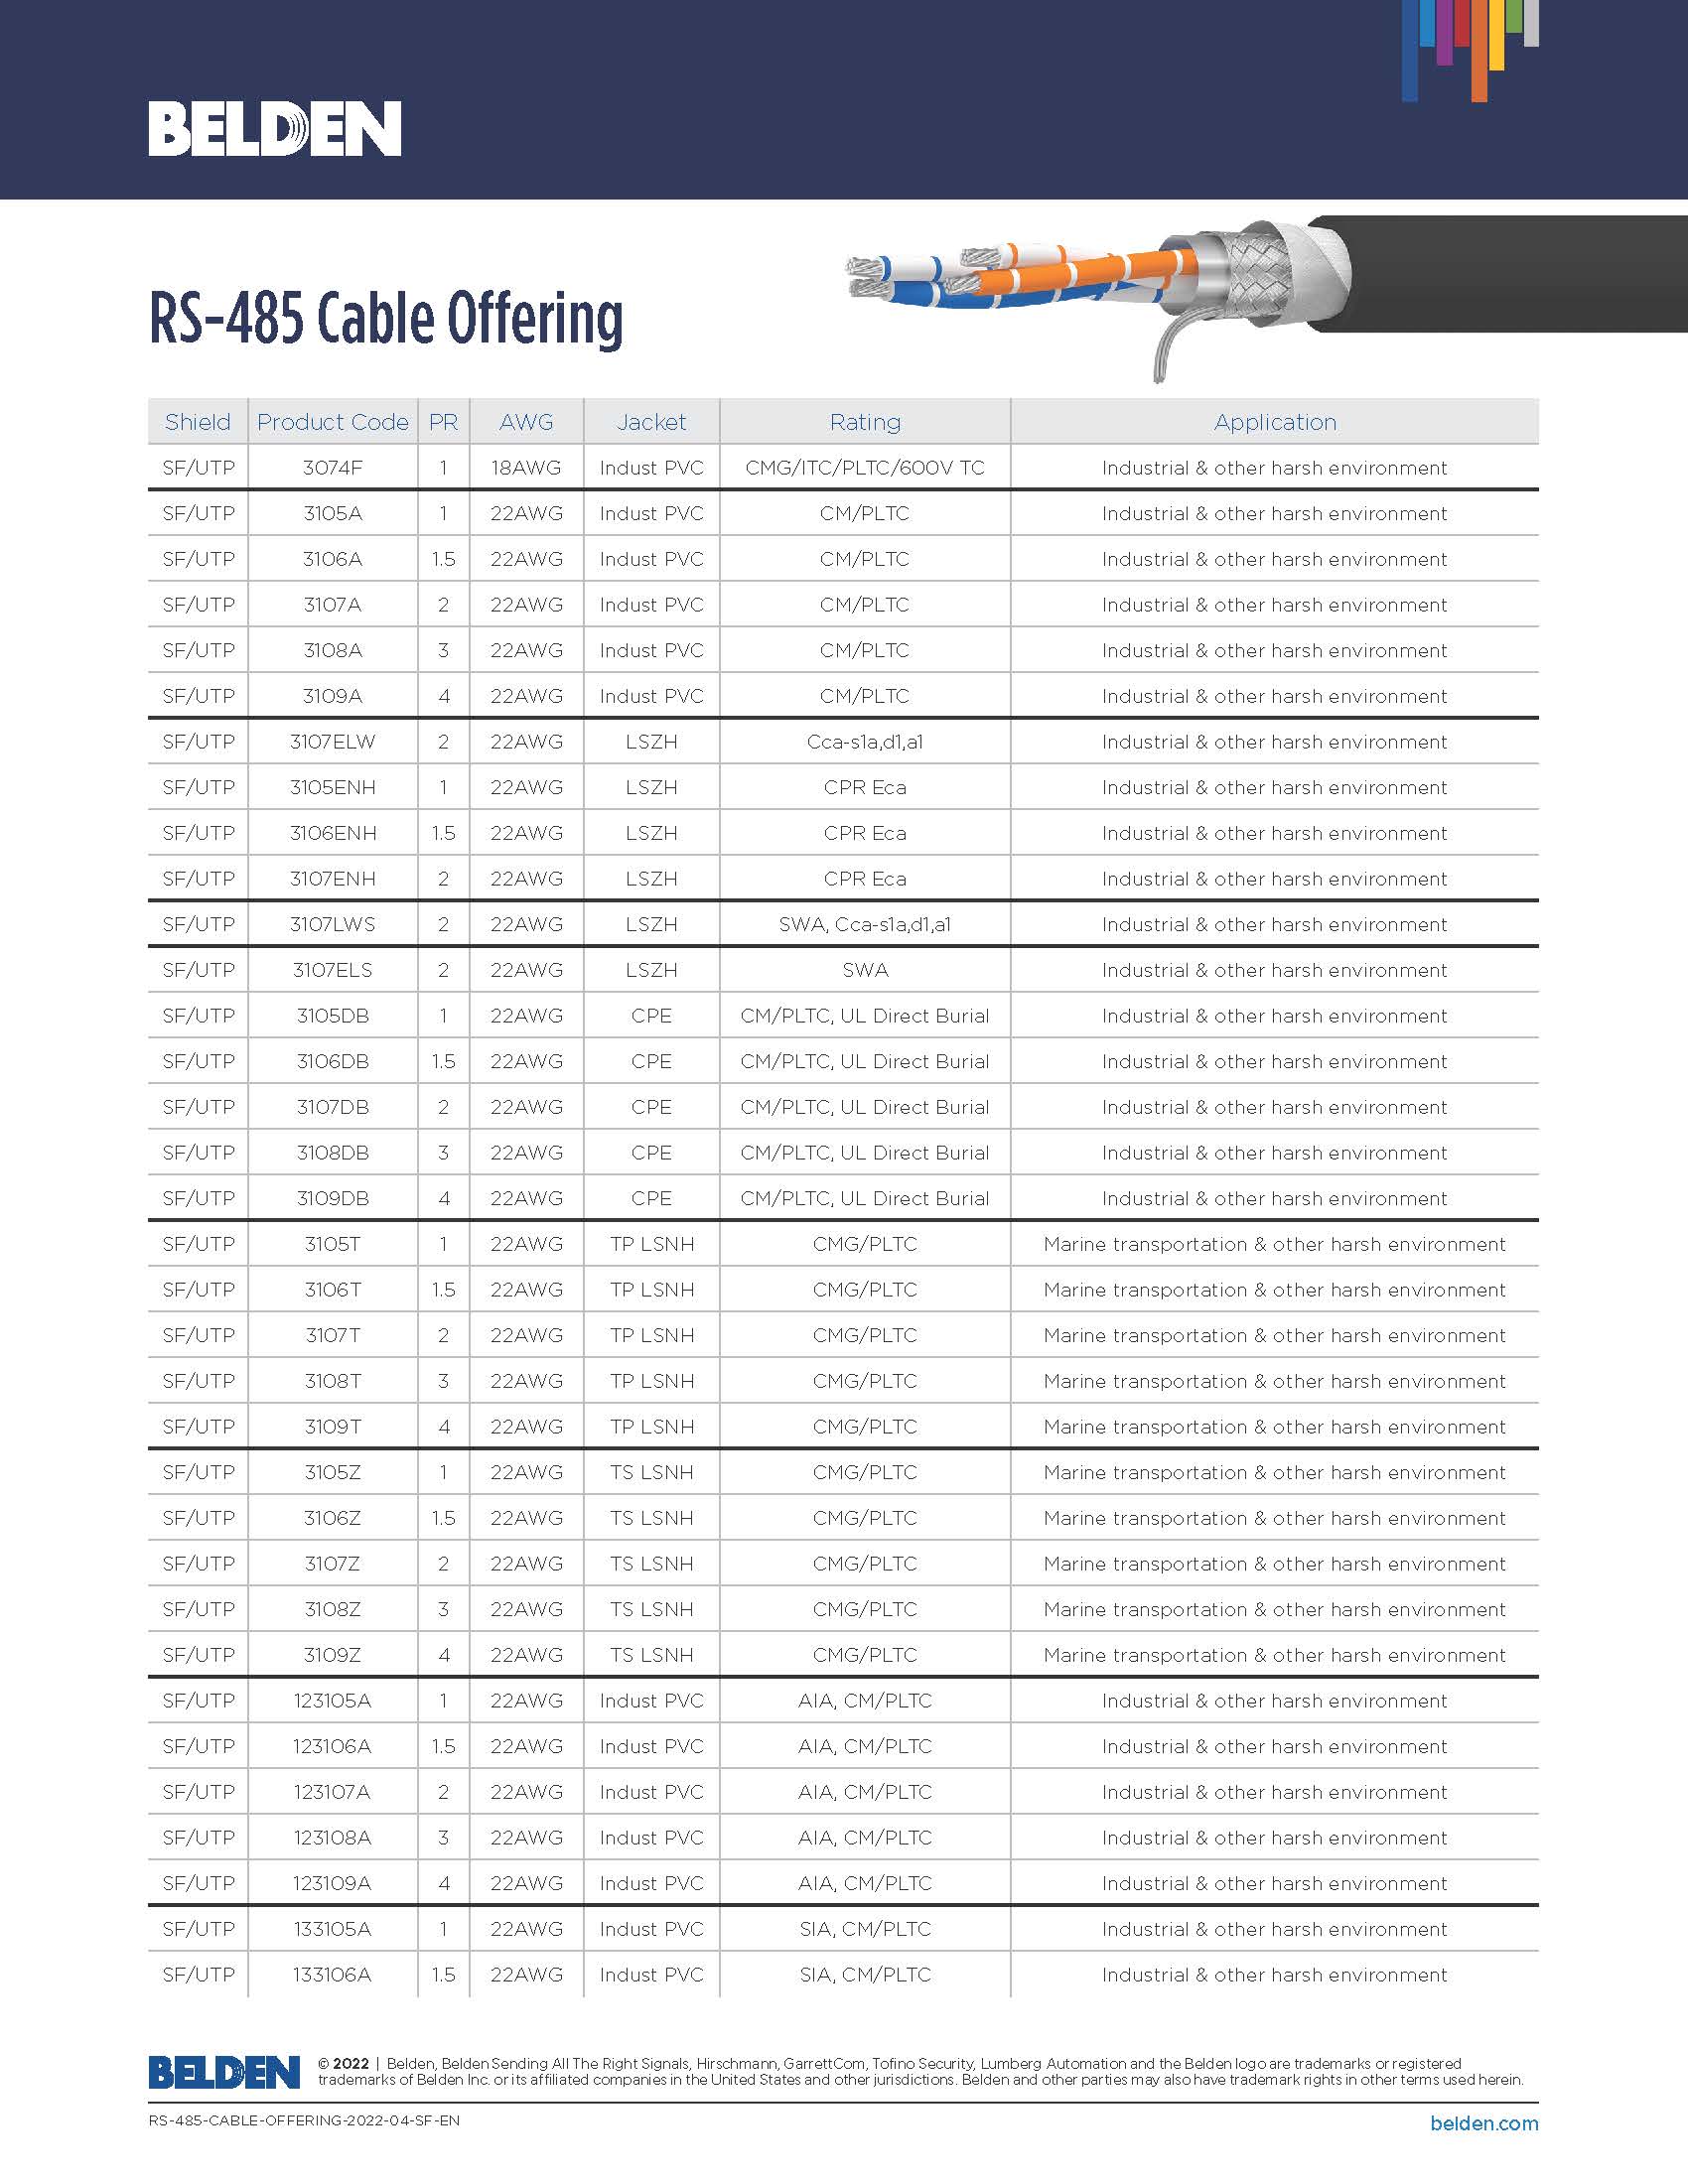 BELDEN RS-485 Cable 자료 2